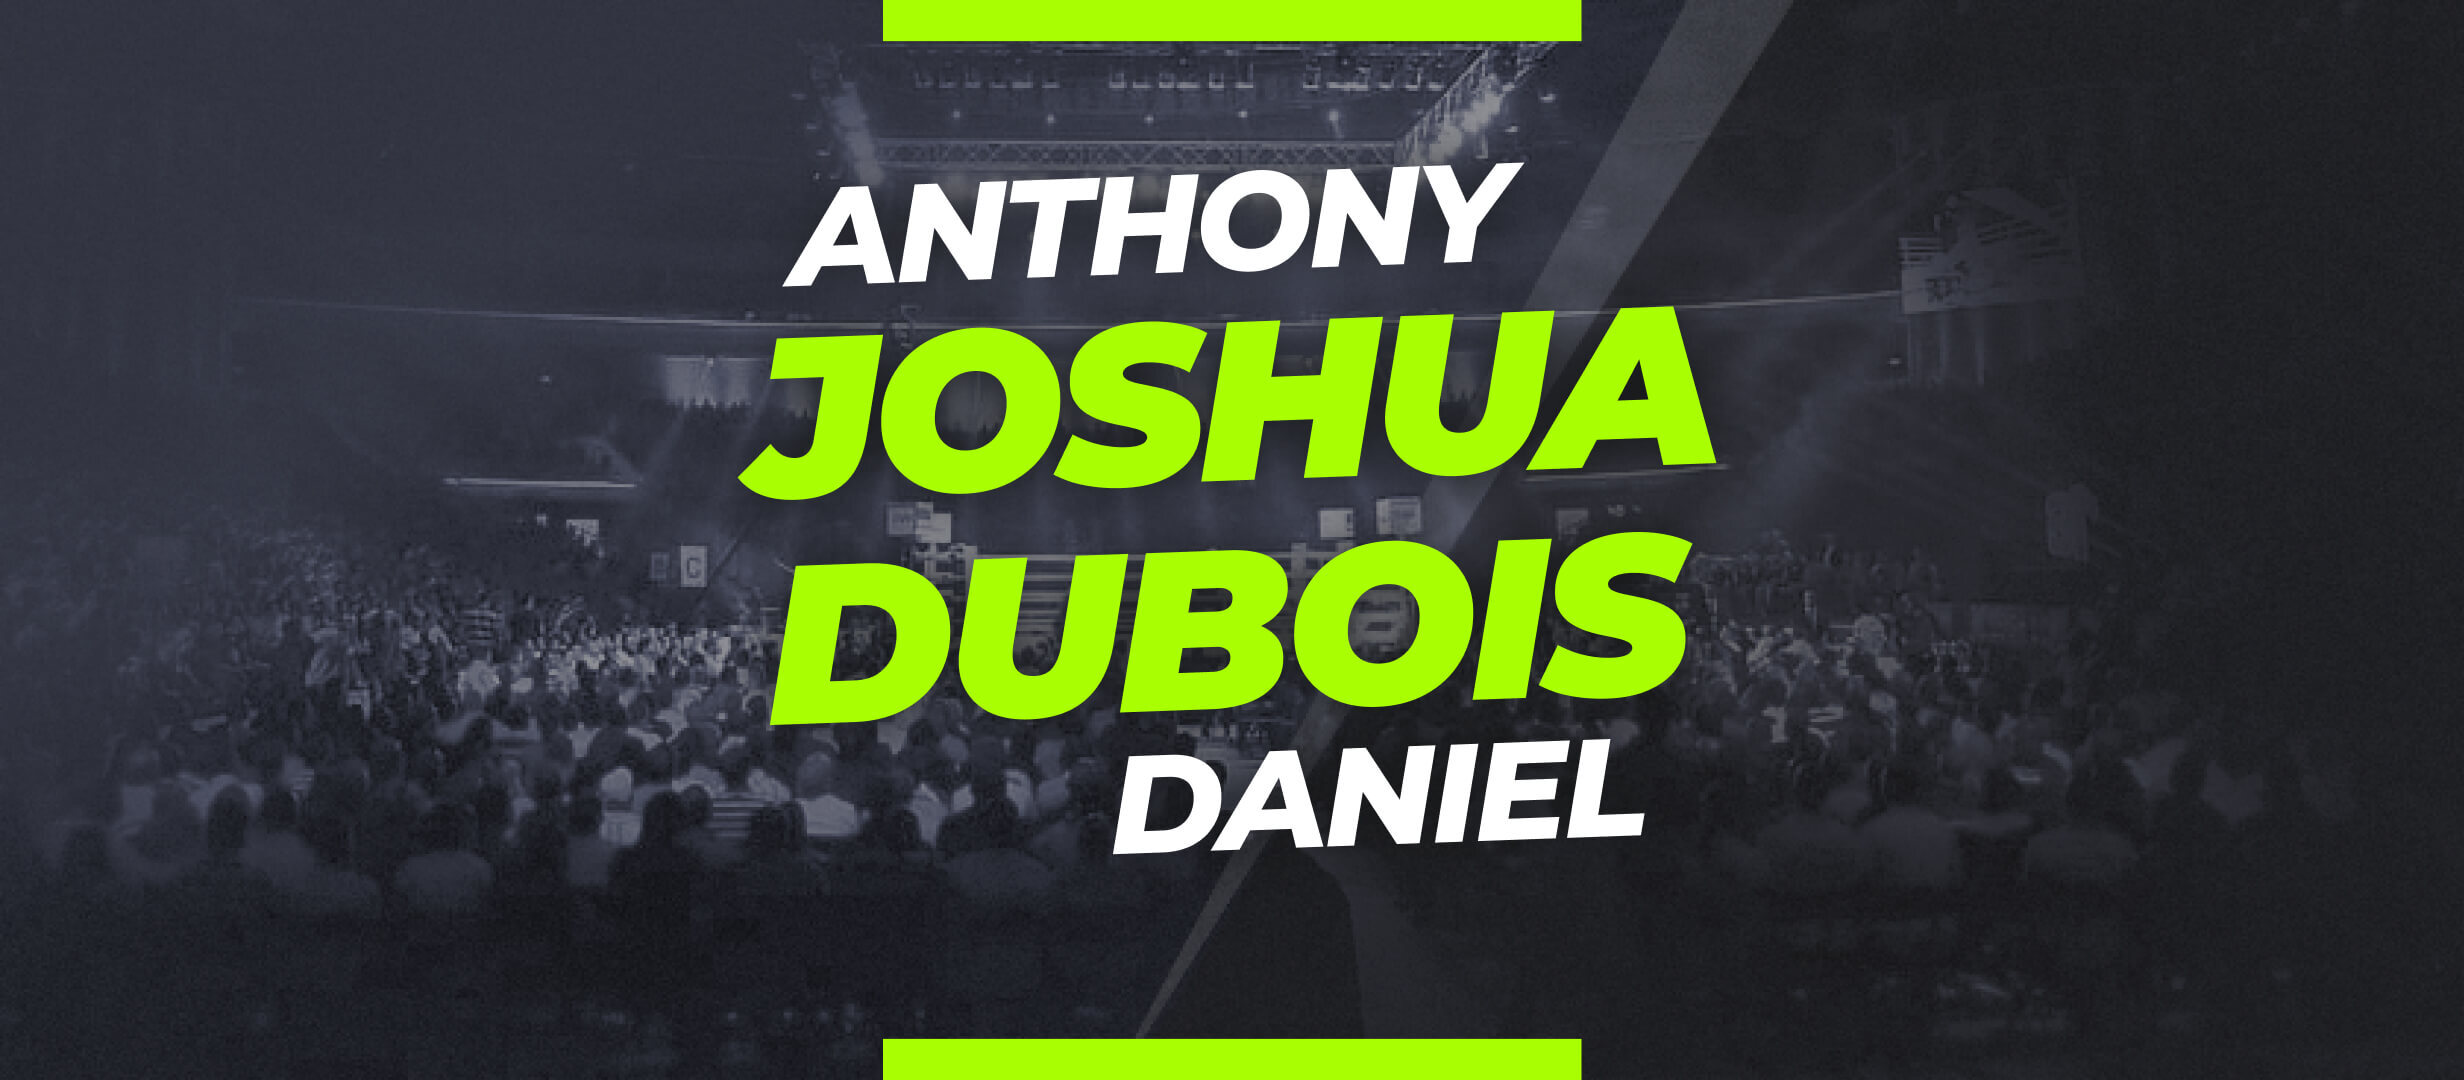 Joshua vs Dubois Odds & Prediction on Heavyweight fight at Wembley Stadium